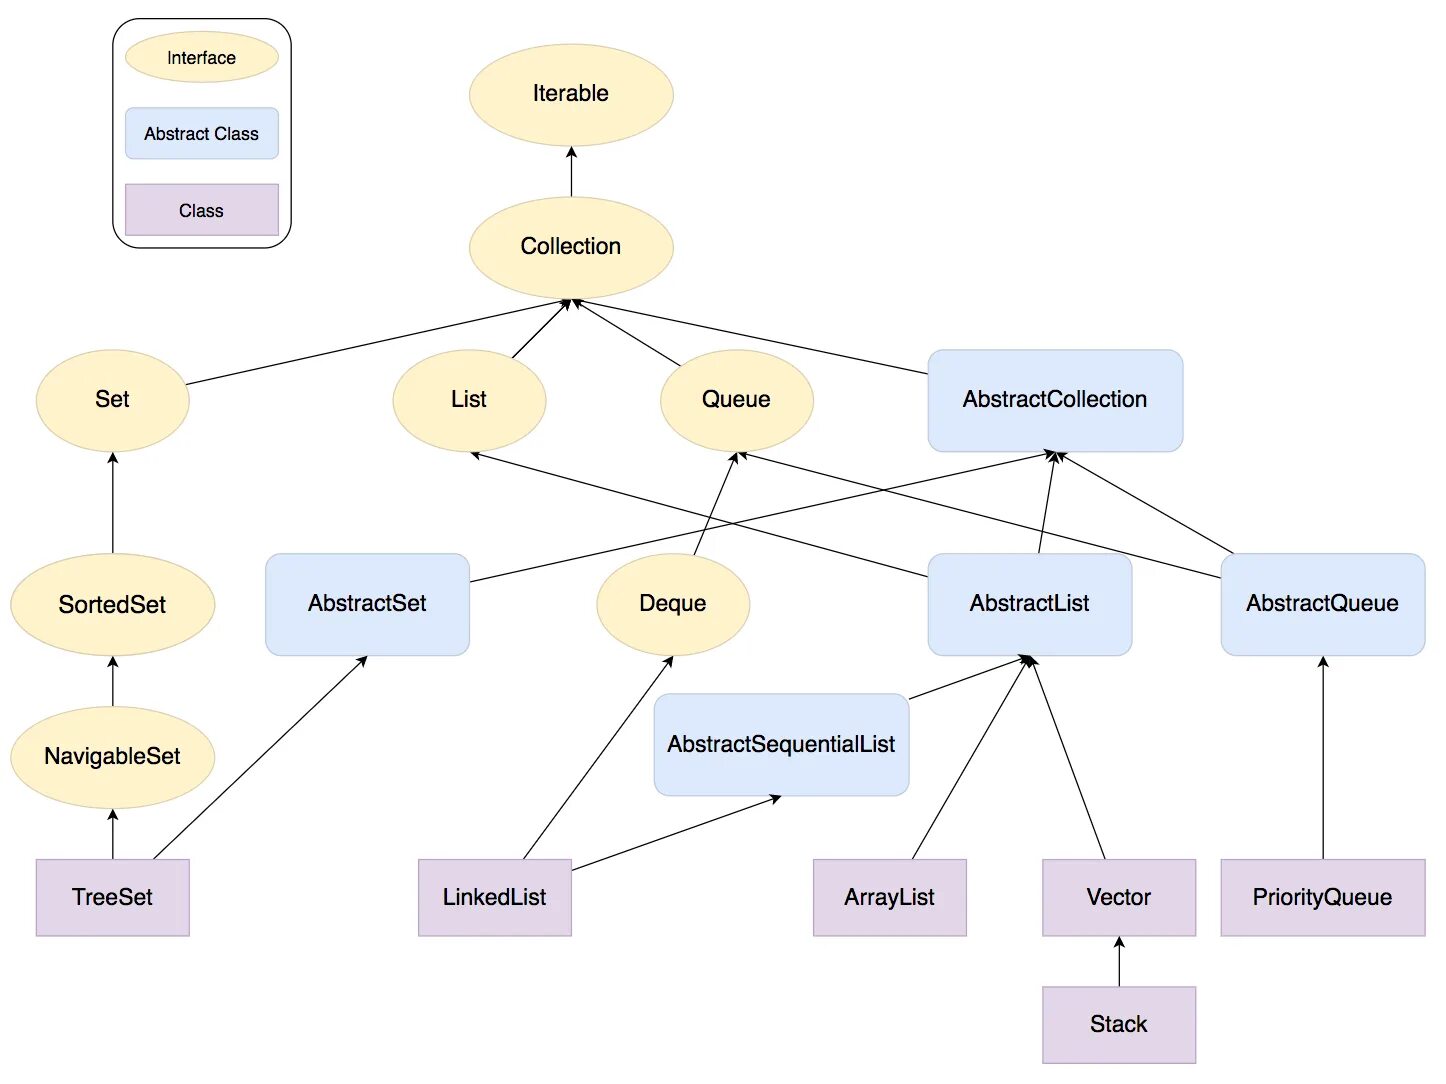 Java host. Иерархия классов collection java. Иерархия наследования коллекций java. Java collections Hierarchy. Структура java collection Framework.